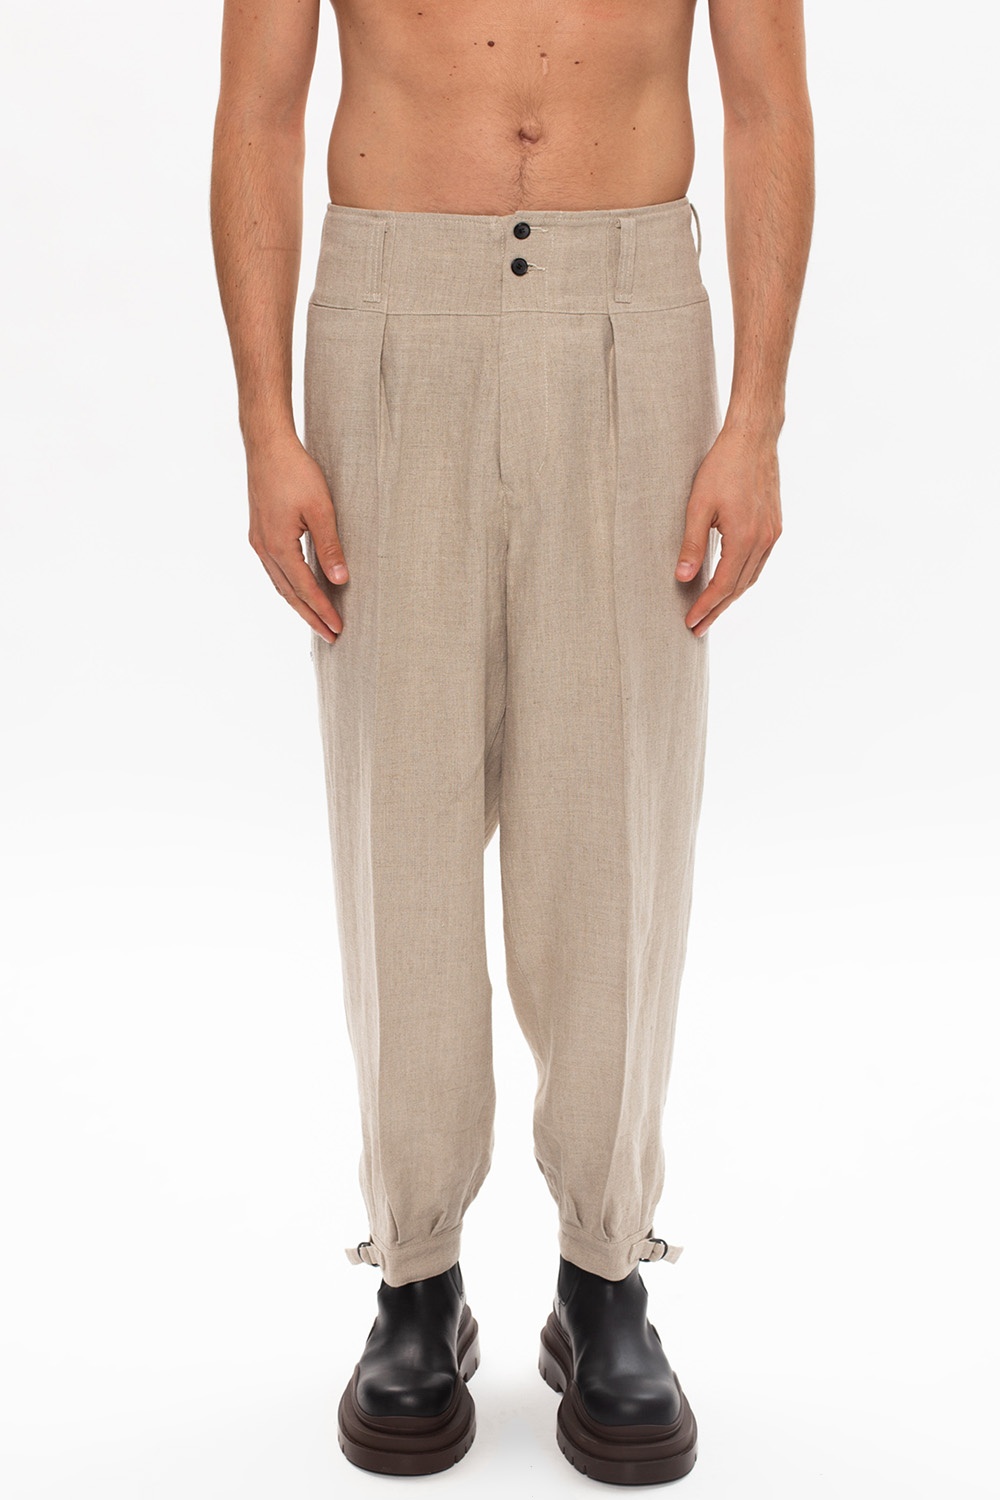 Ambush Linen indigo trousers with several pockets